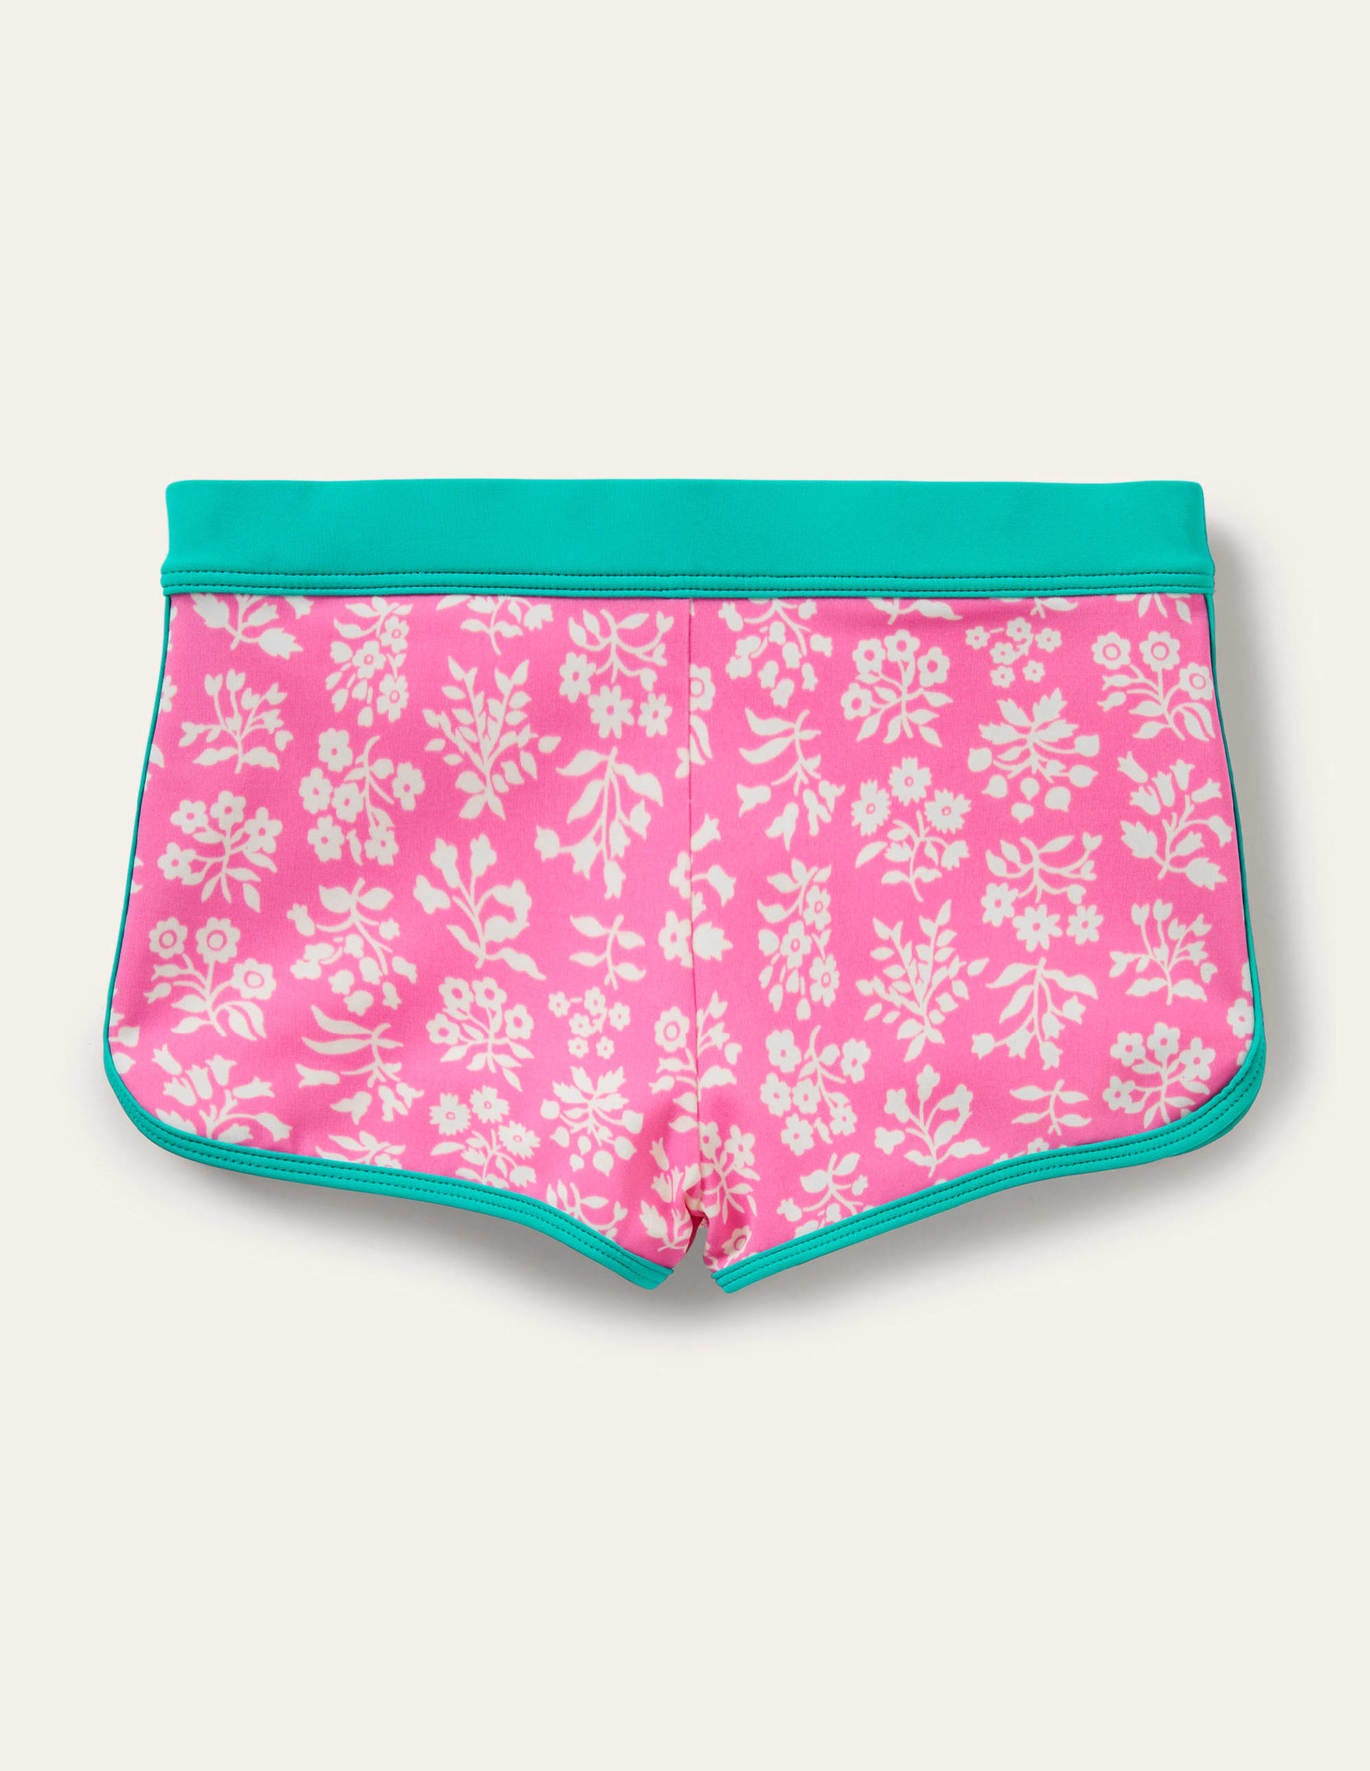 Boden Patterned Swim Shorts - Strawberry Pink Woodblock